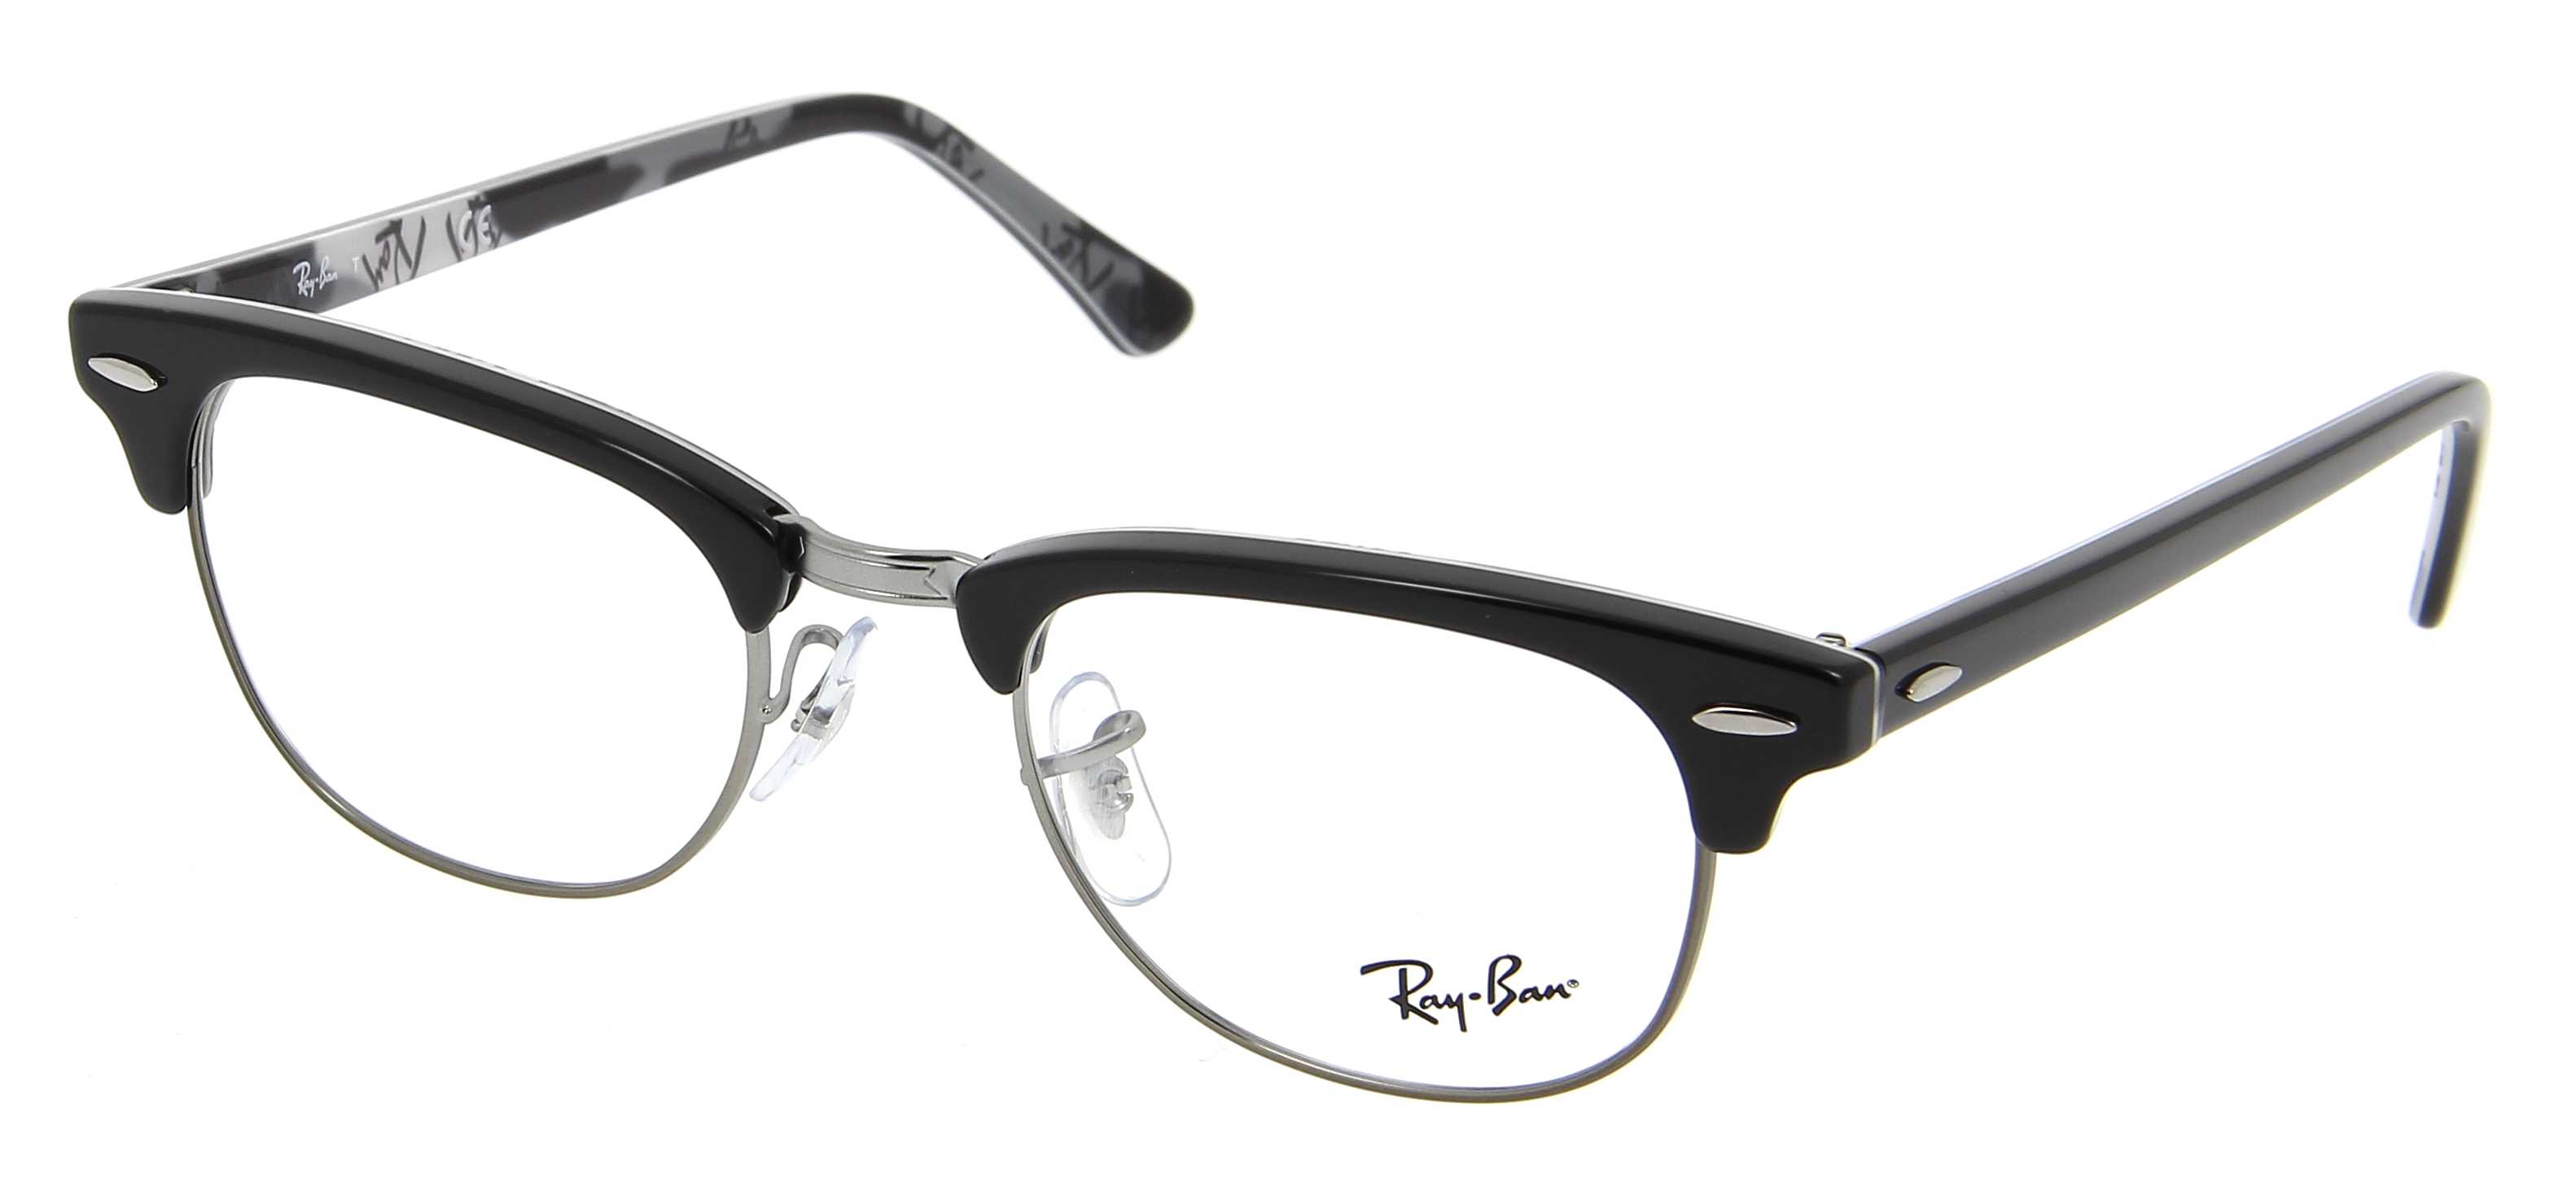 Eyeglasses Ray Ban Rx 5154 5649 Clubmaster 49 21 Unisex Noir Camouflage Round Full Frame Glasses Vintage 49mmx21mm 111 163